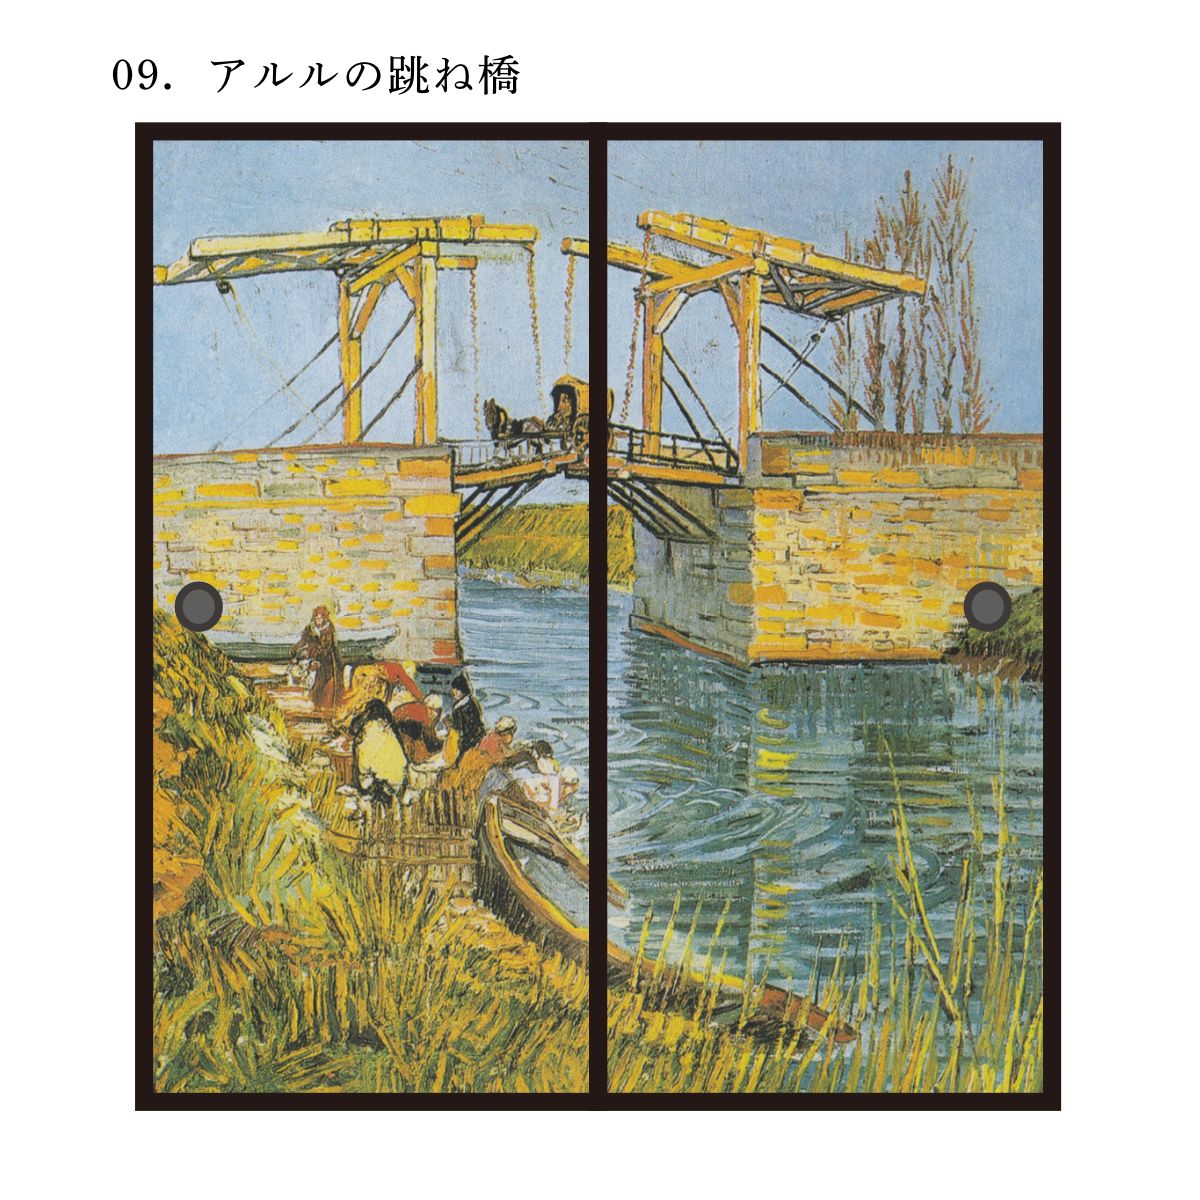 World Famous Painting Fusuma Paper Van Gogh Arles Drawbridge Set of 2 Water Paste Type Width 91cm x Length 182cm Fusuma Paper Asahipen WWA-009F